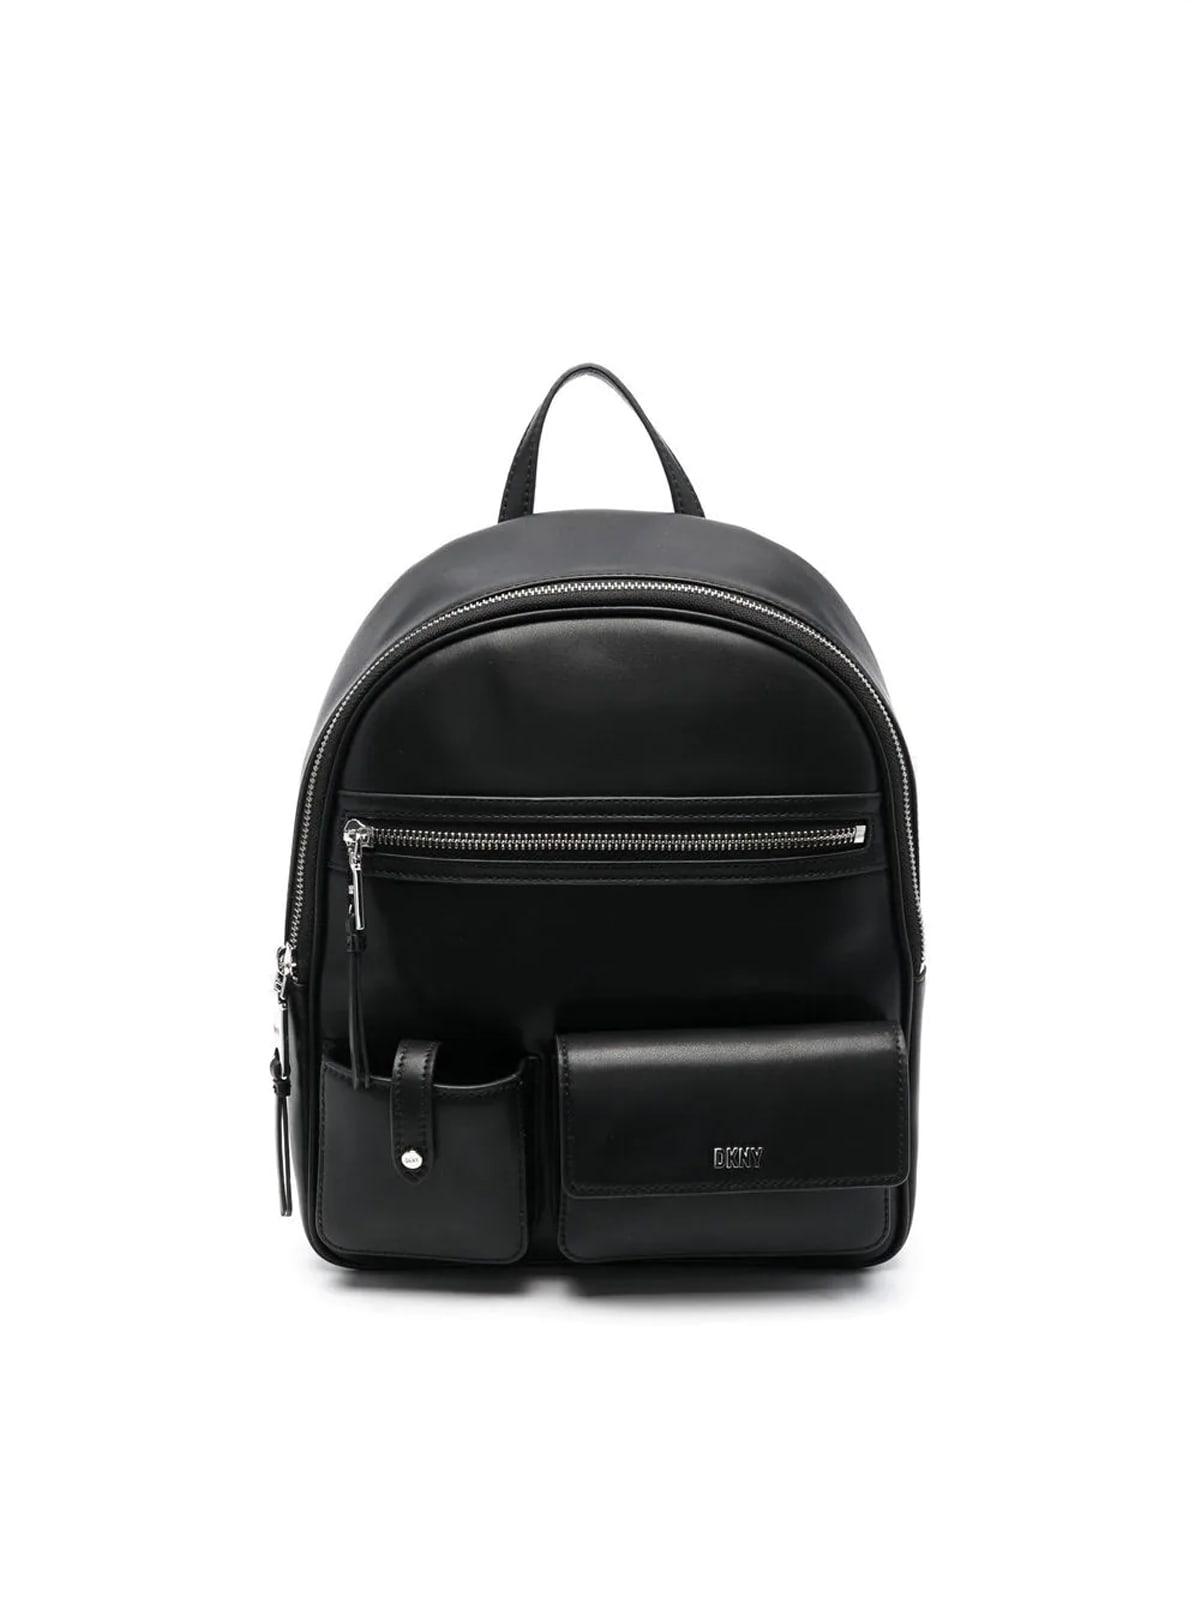 DKNY Zyon Backpack in Black | Lyst